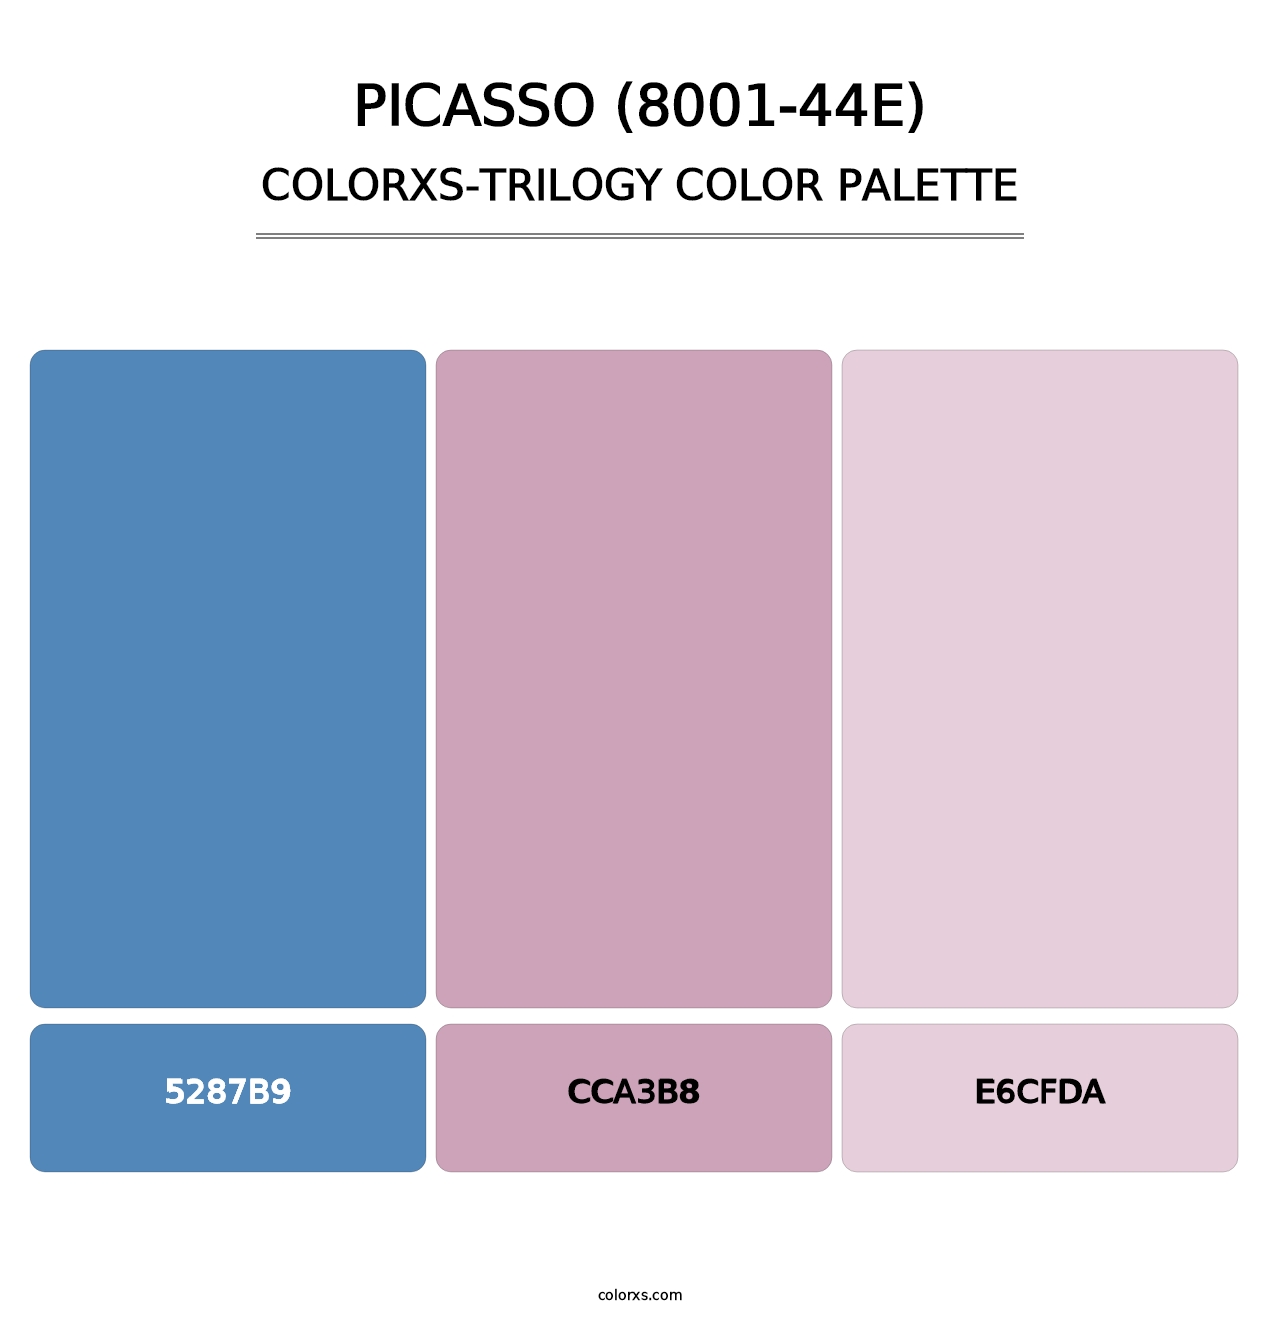 Picasso (8001-44E) - Colorxs Trilogy Palette